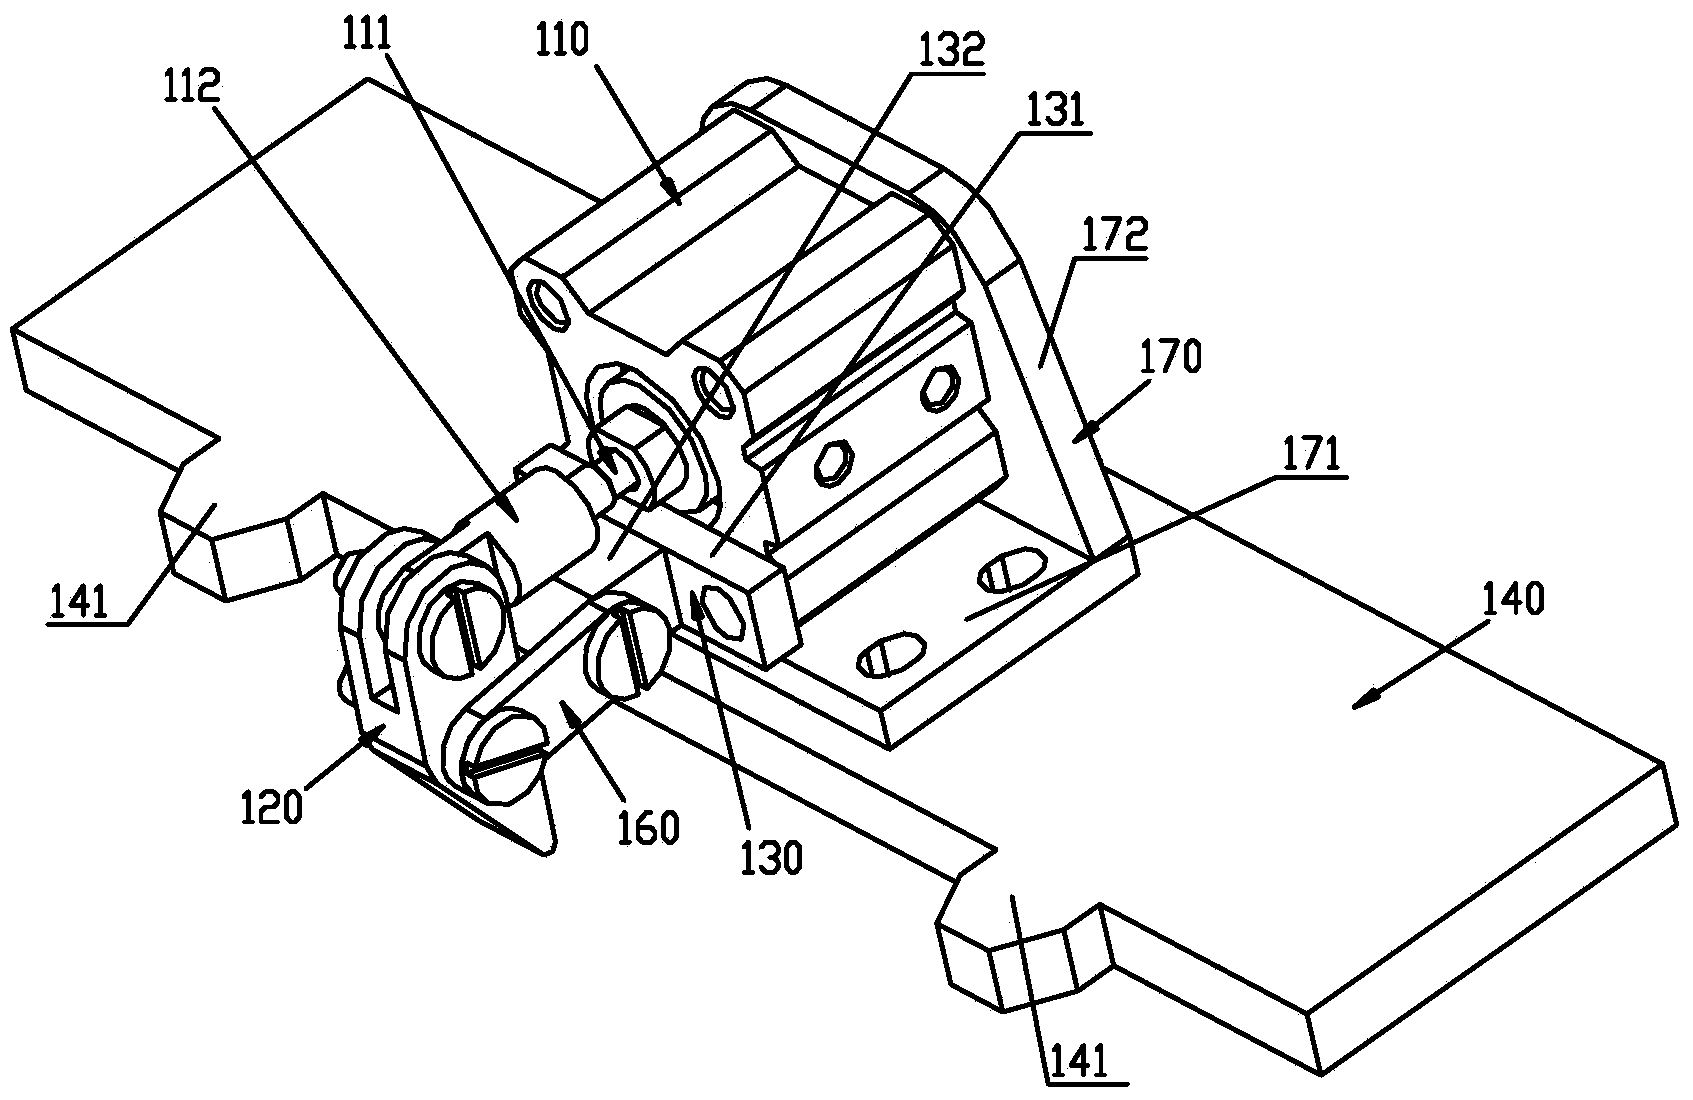 Pattern sewing machine template device